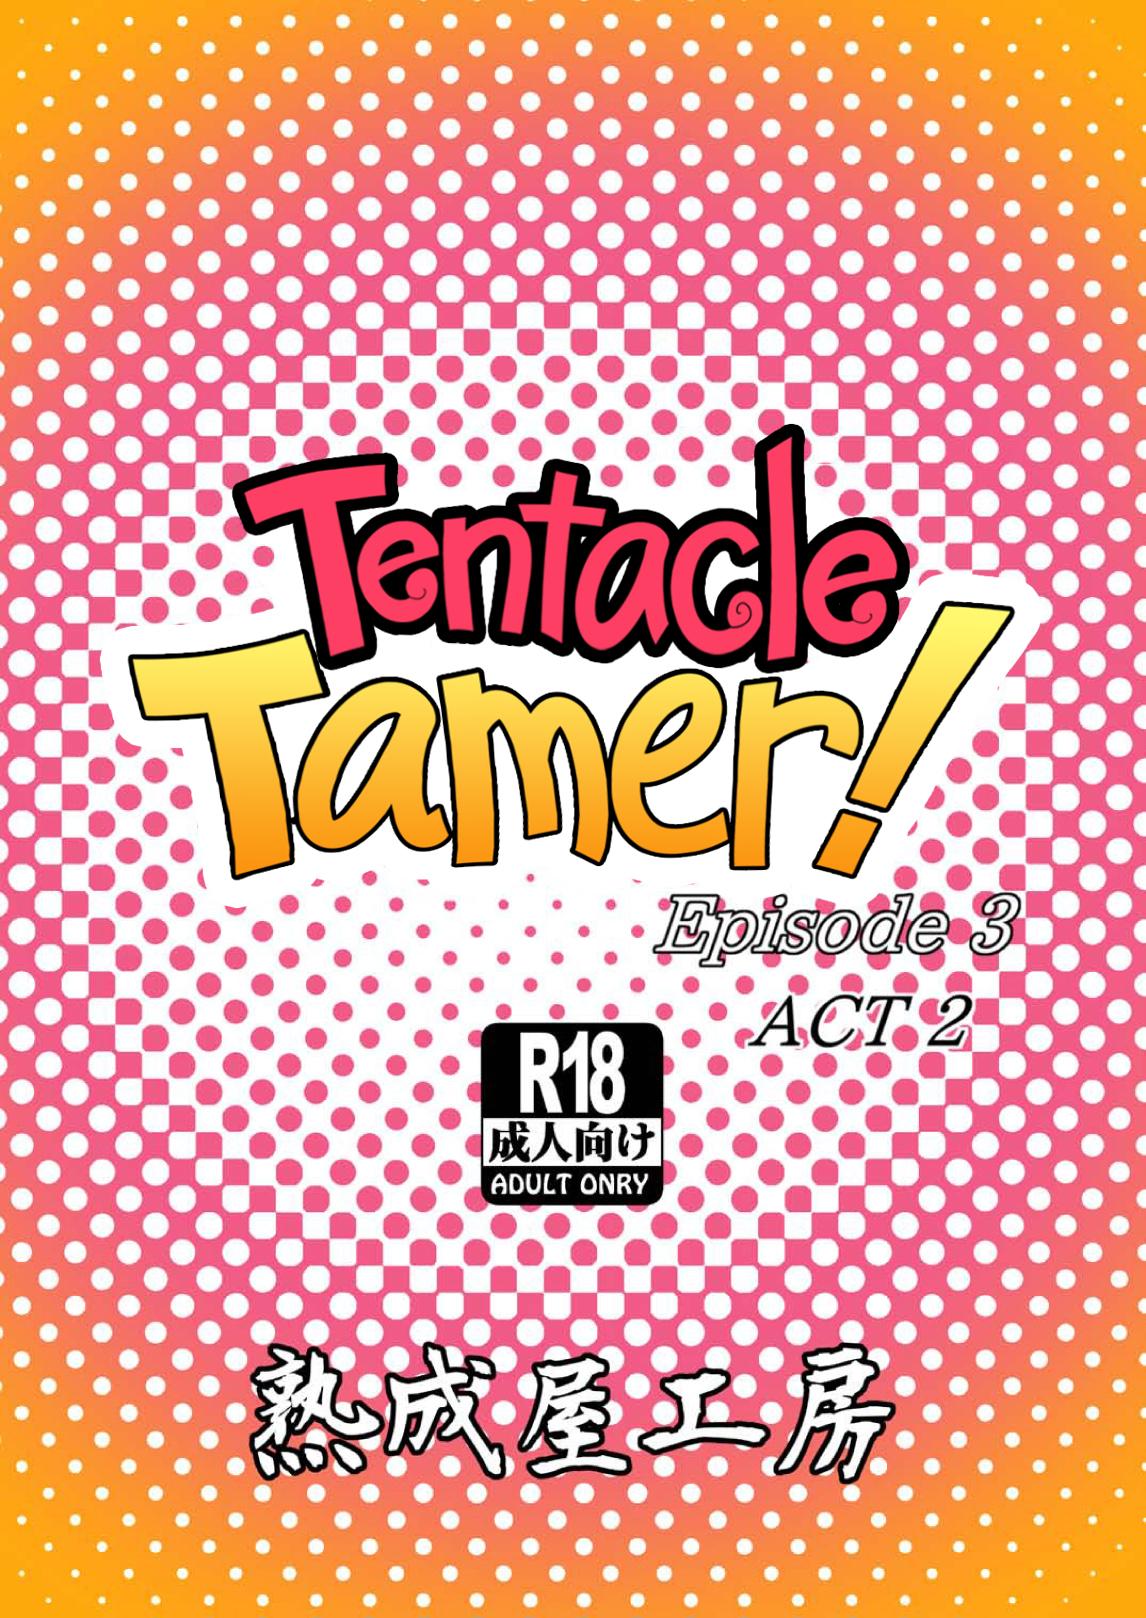 Tentacle Tamer! Episode 3 Act 2 44